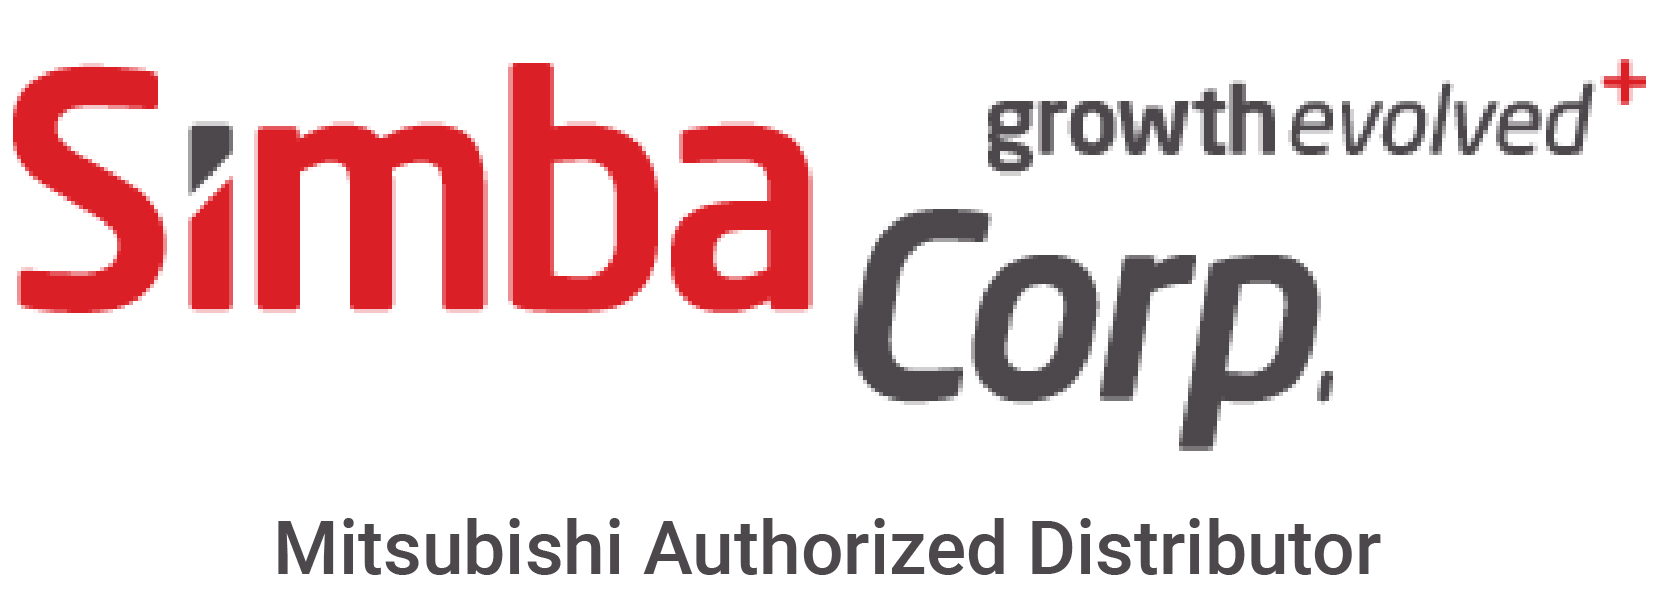 Simba Corp Logo